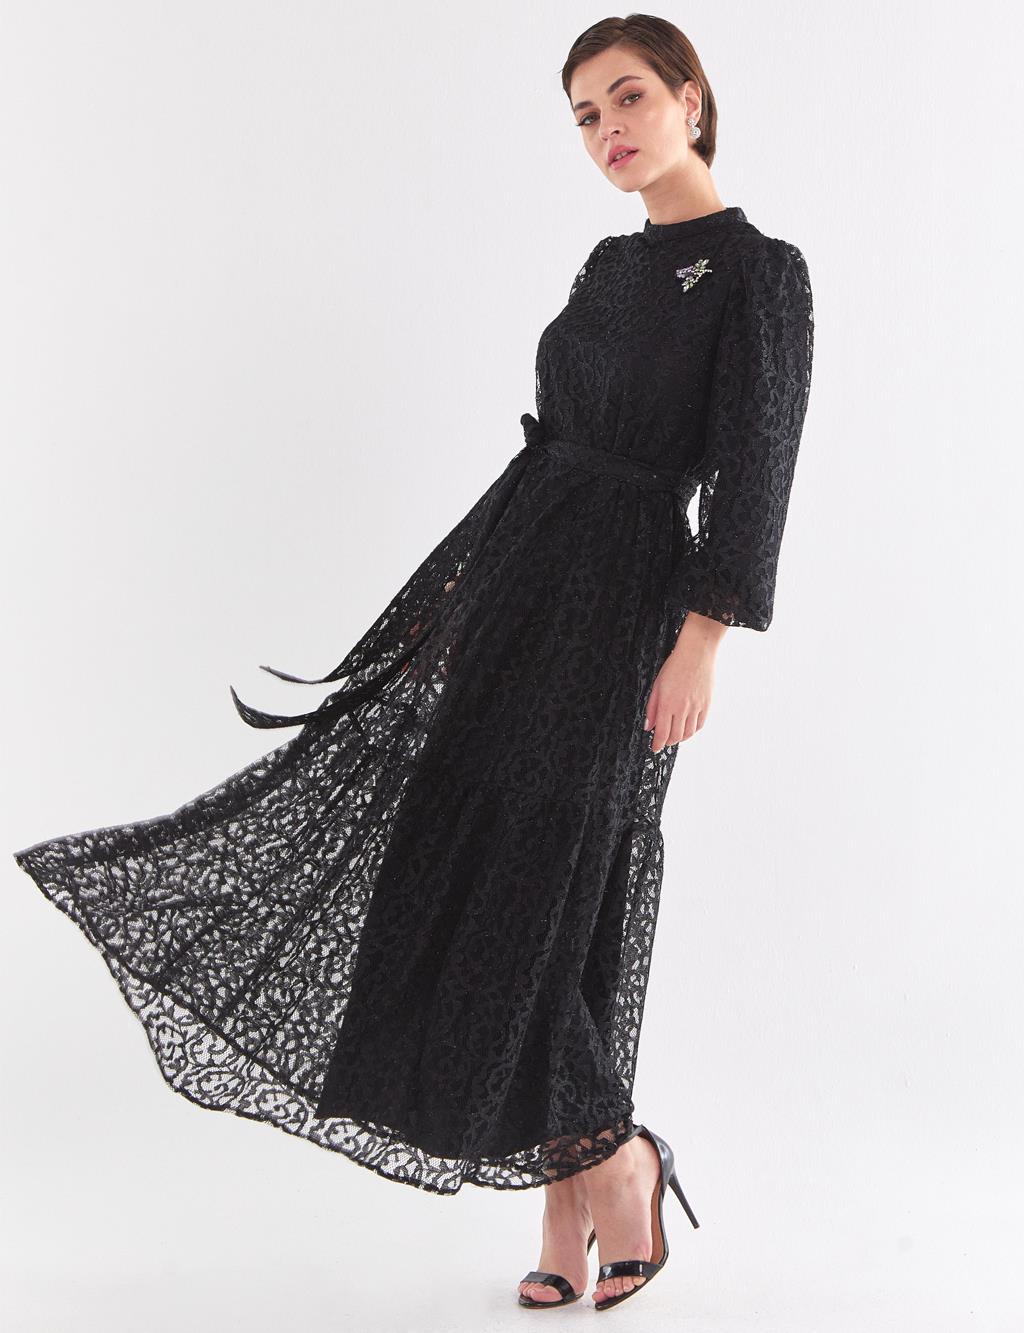 Belted Lace Dress Black